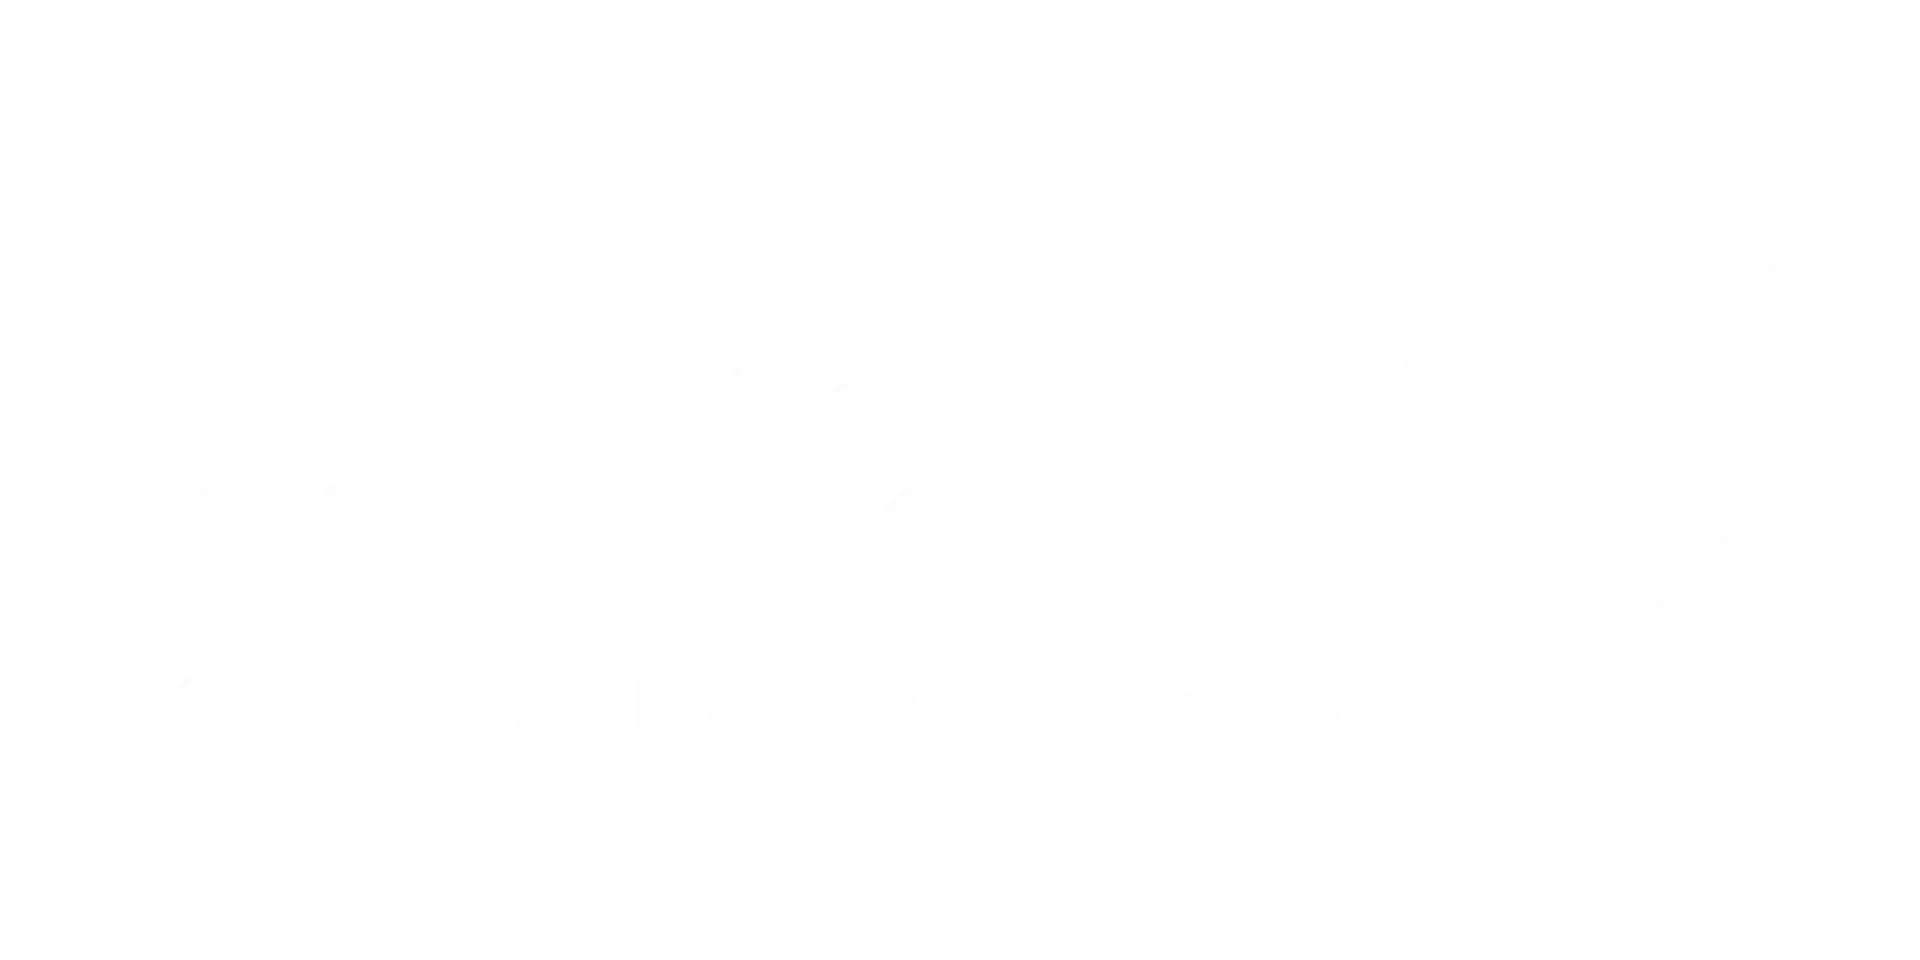 Certform's logo